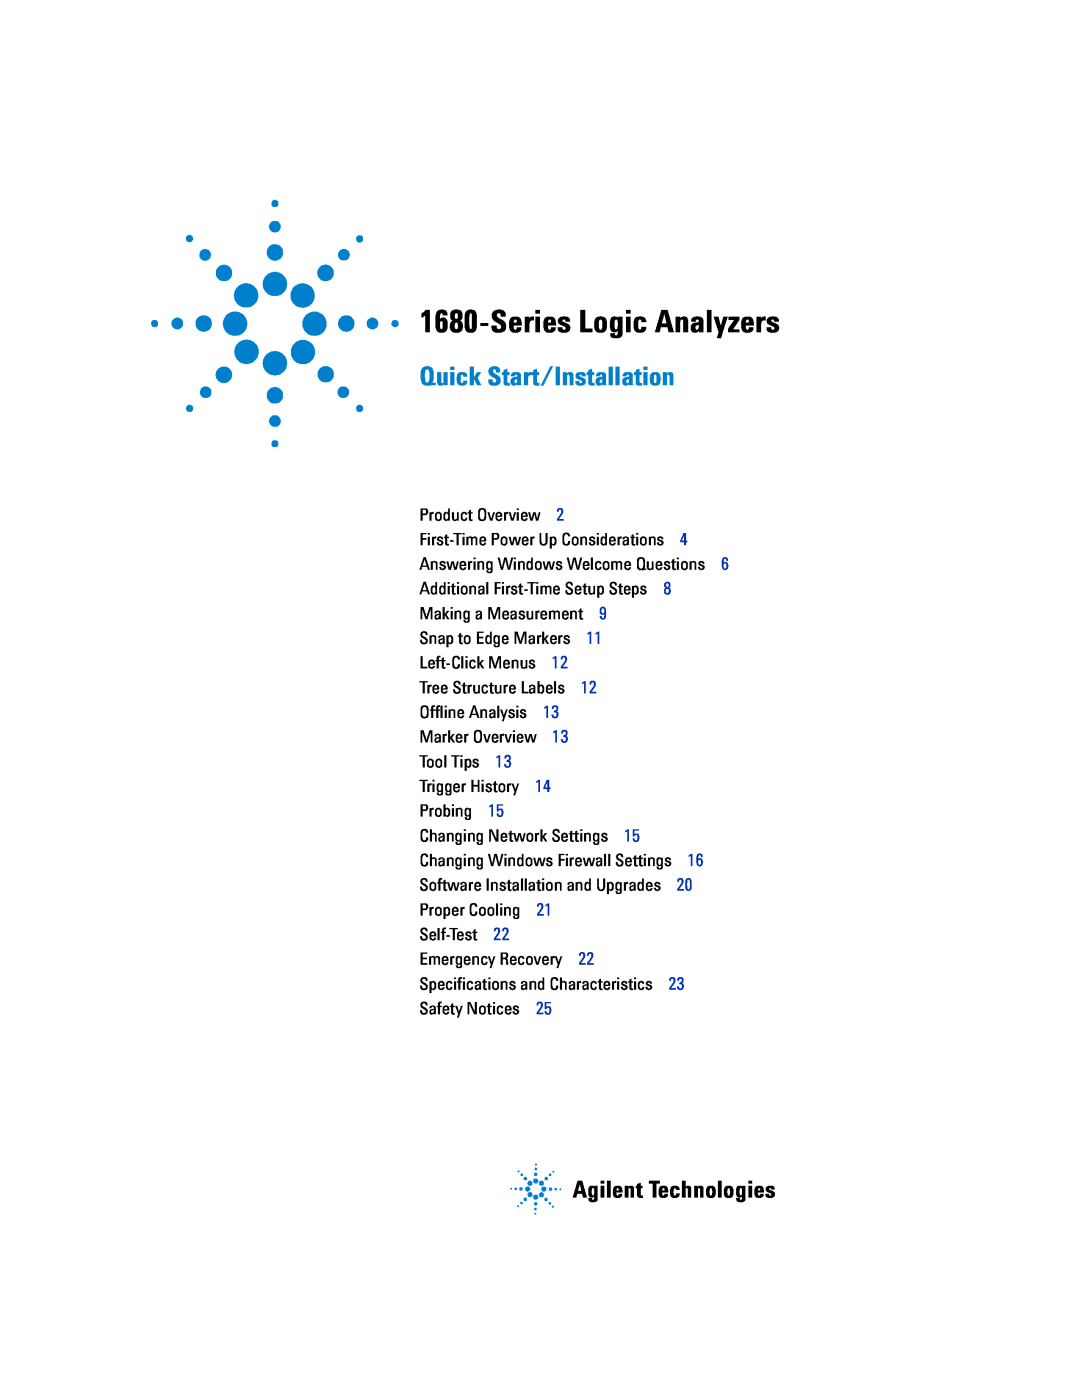 Agilent Technologies 1690 manual Agilent Technologies 1680/90-Series Logic Analyzer, Service Guide 